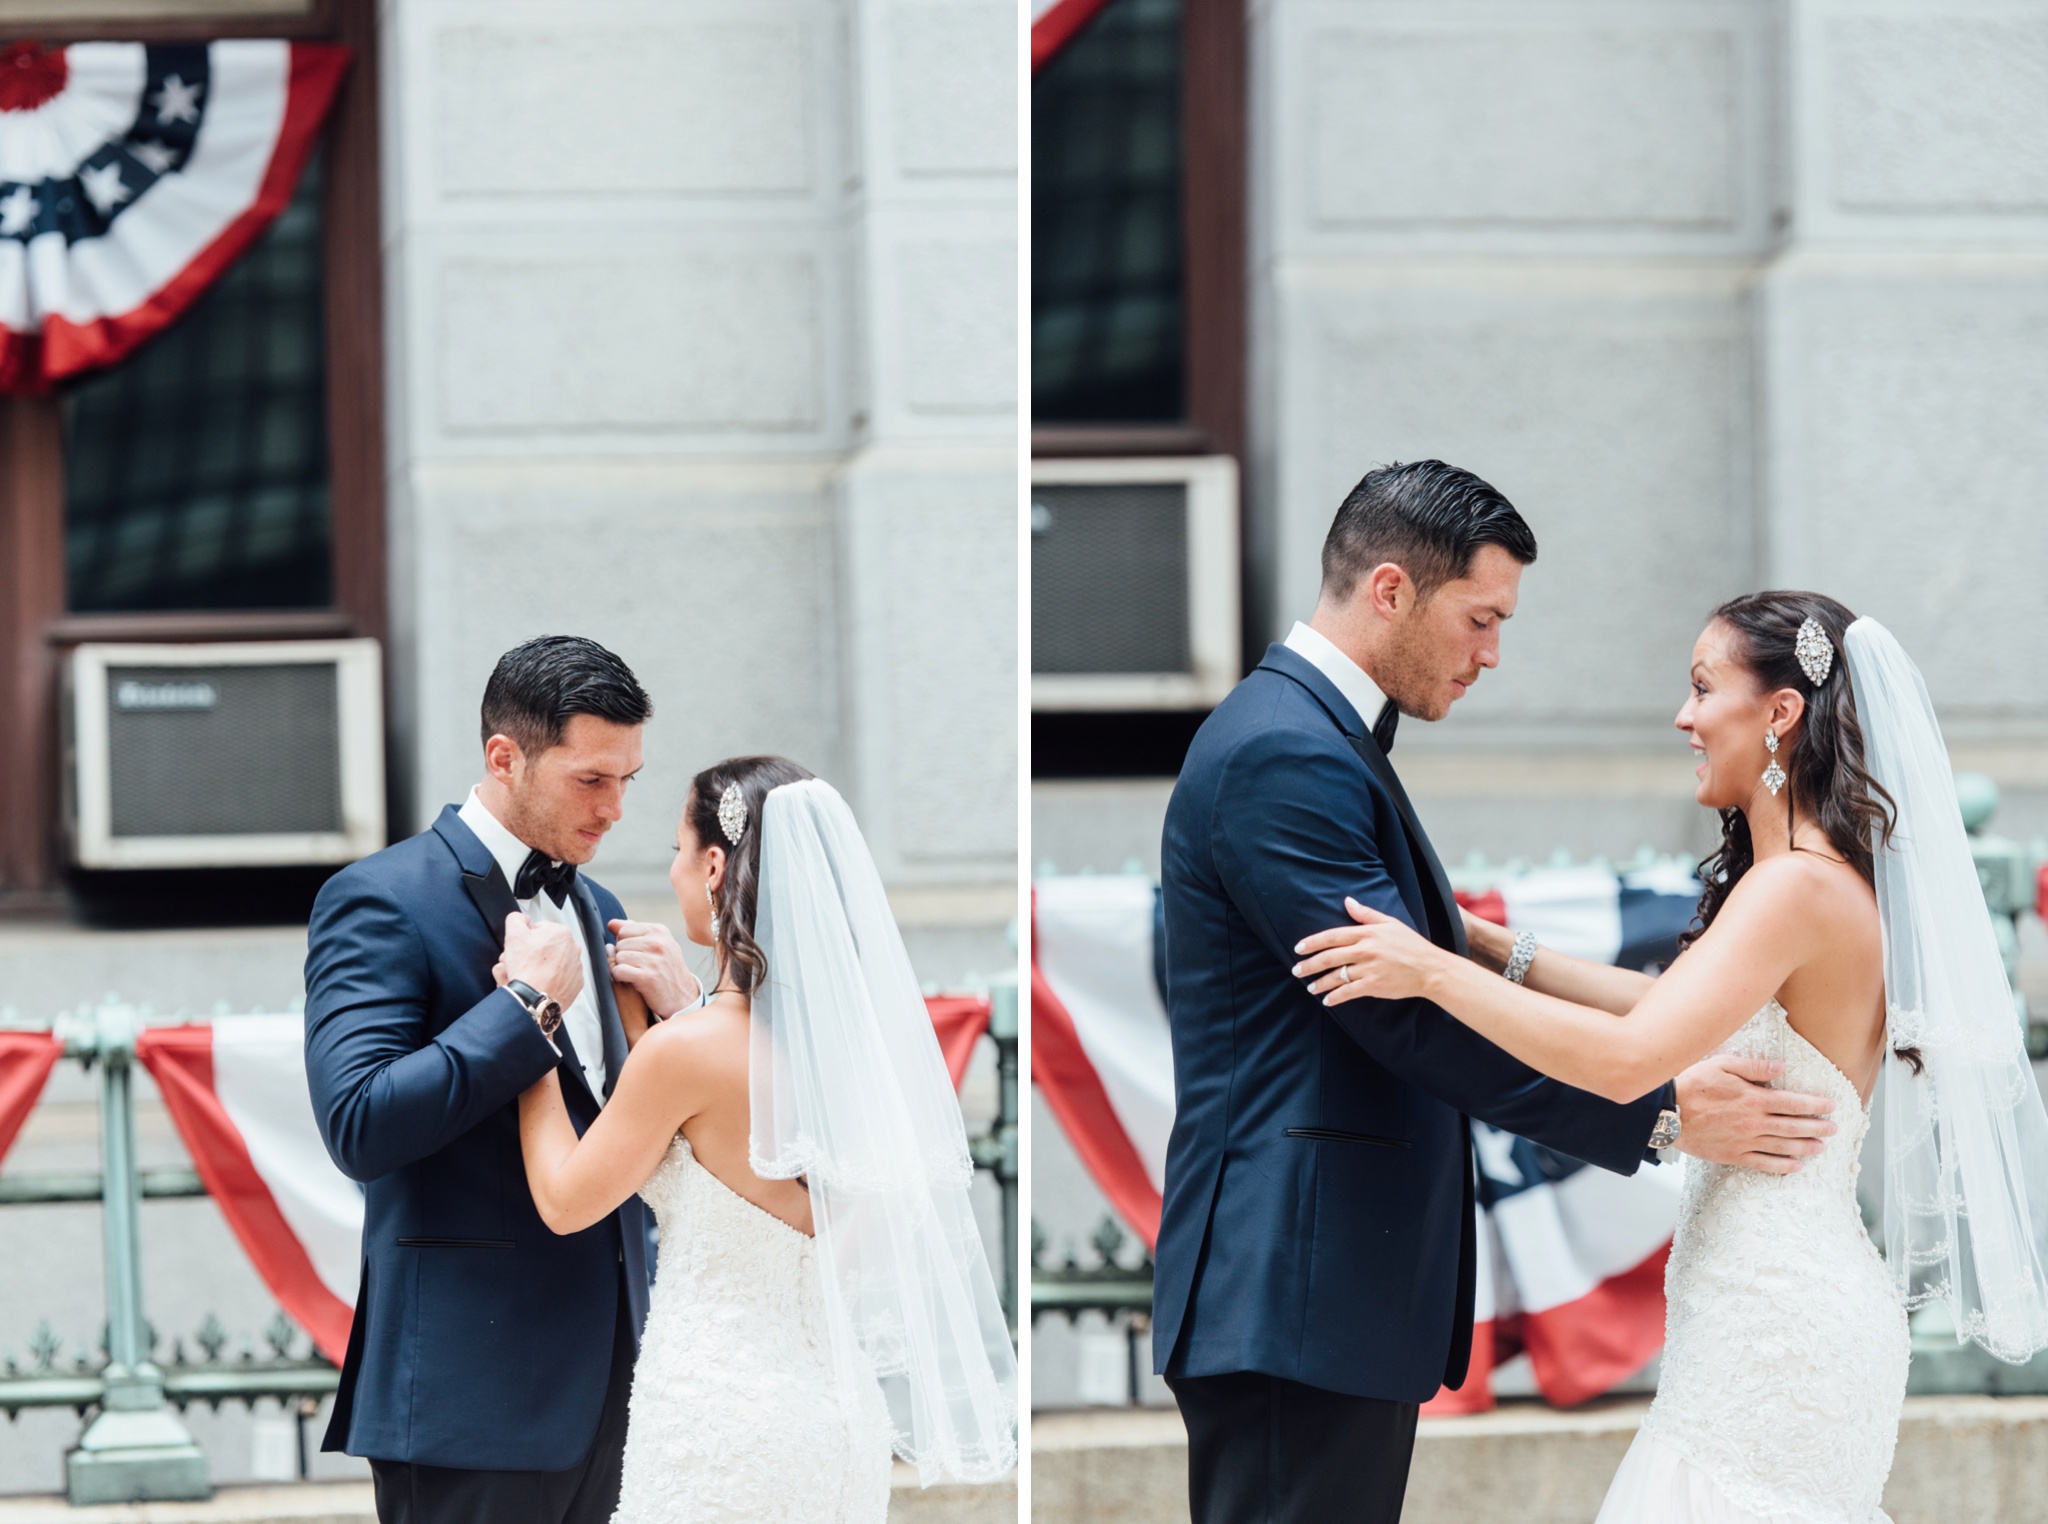 Stephanie + Justin - City Hall First Look - Philadelphia Wedding Photographer - Alison Dunn Photography photo